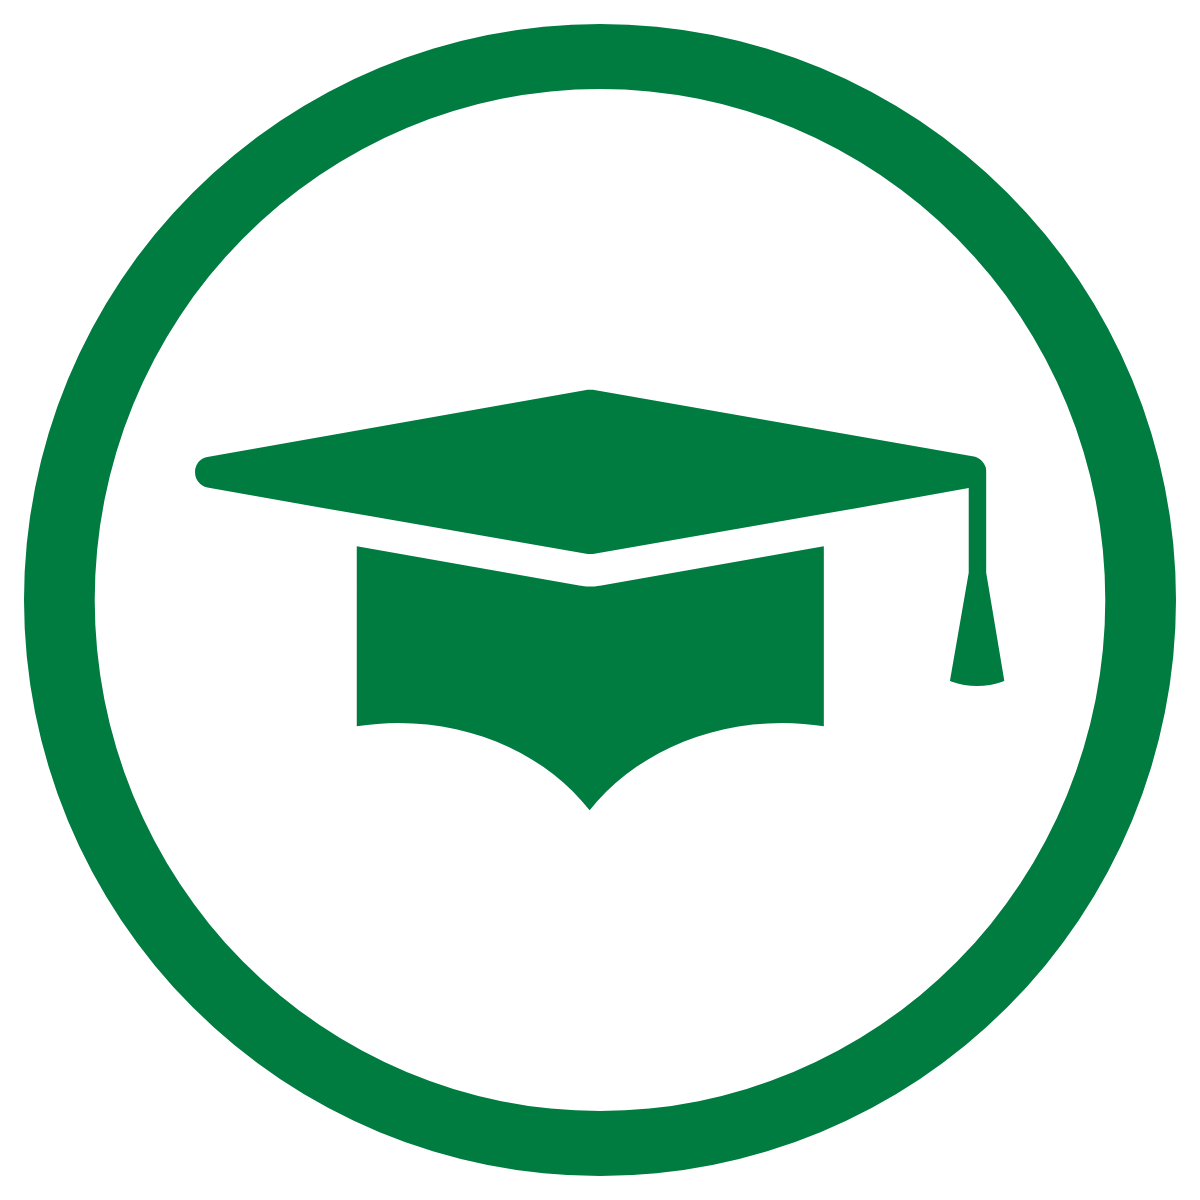 noun_graduation-cap_2042379-1.png